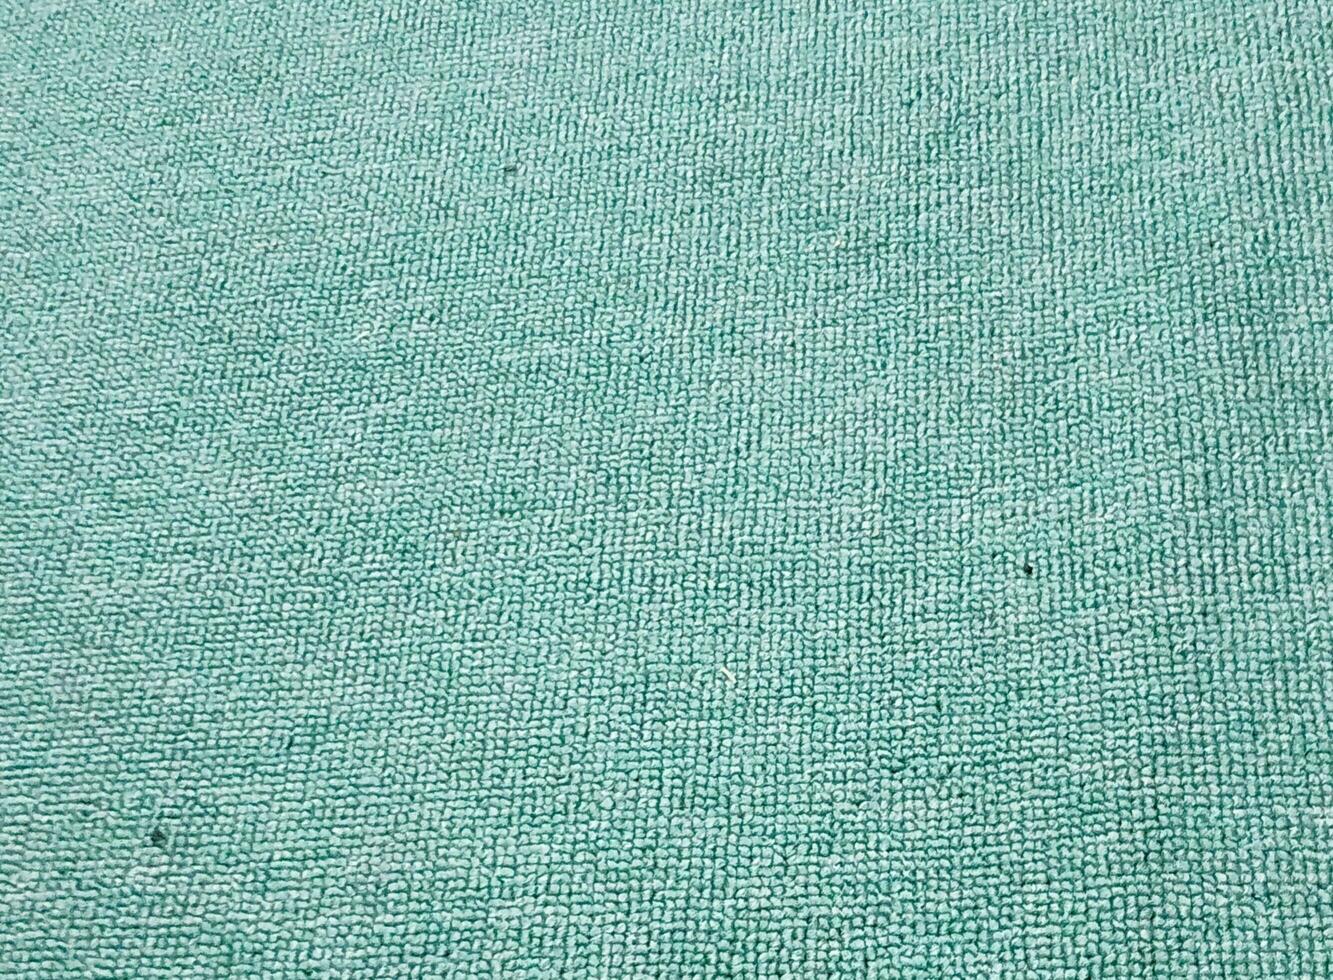 carpet texture photo for background, fill shape, etc